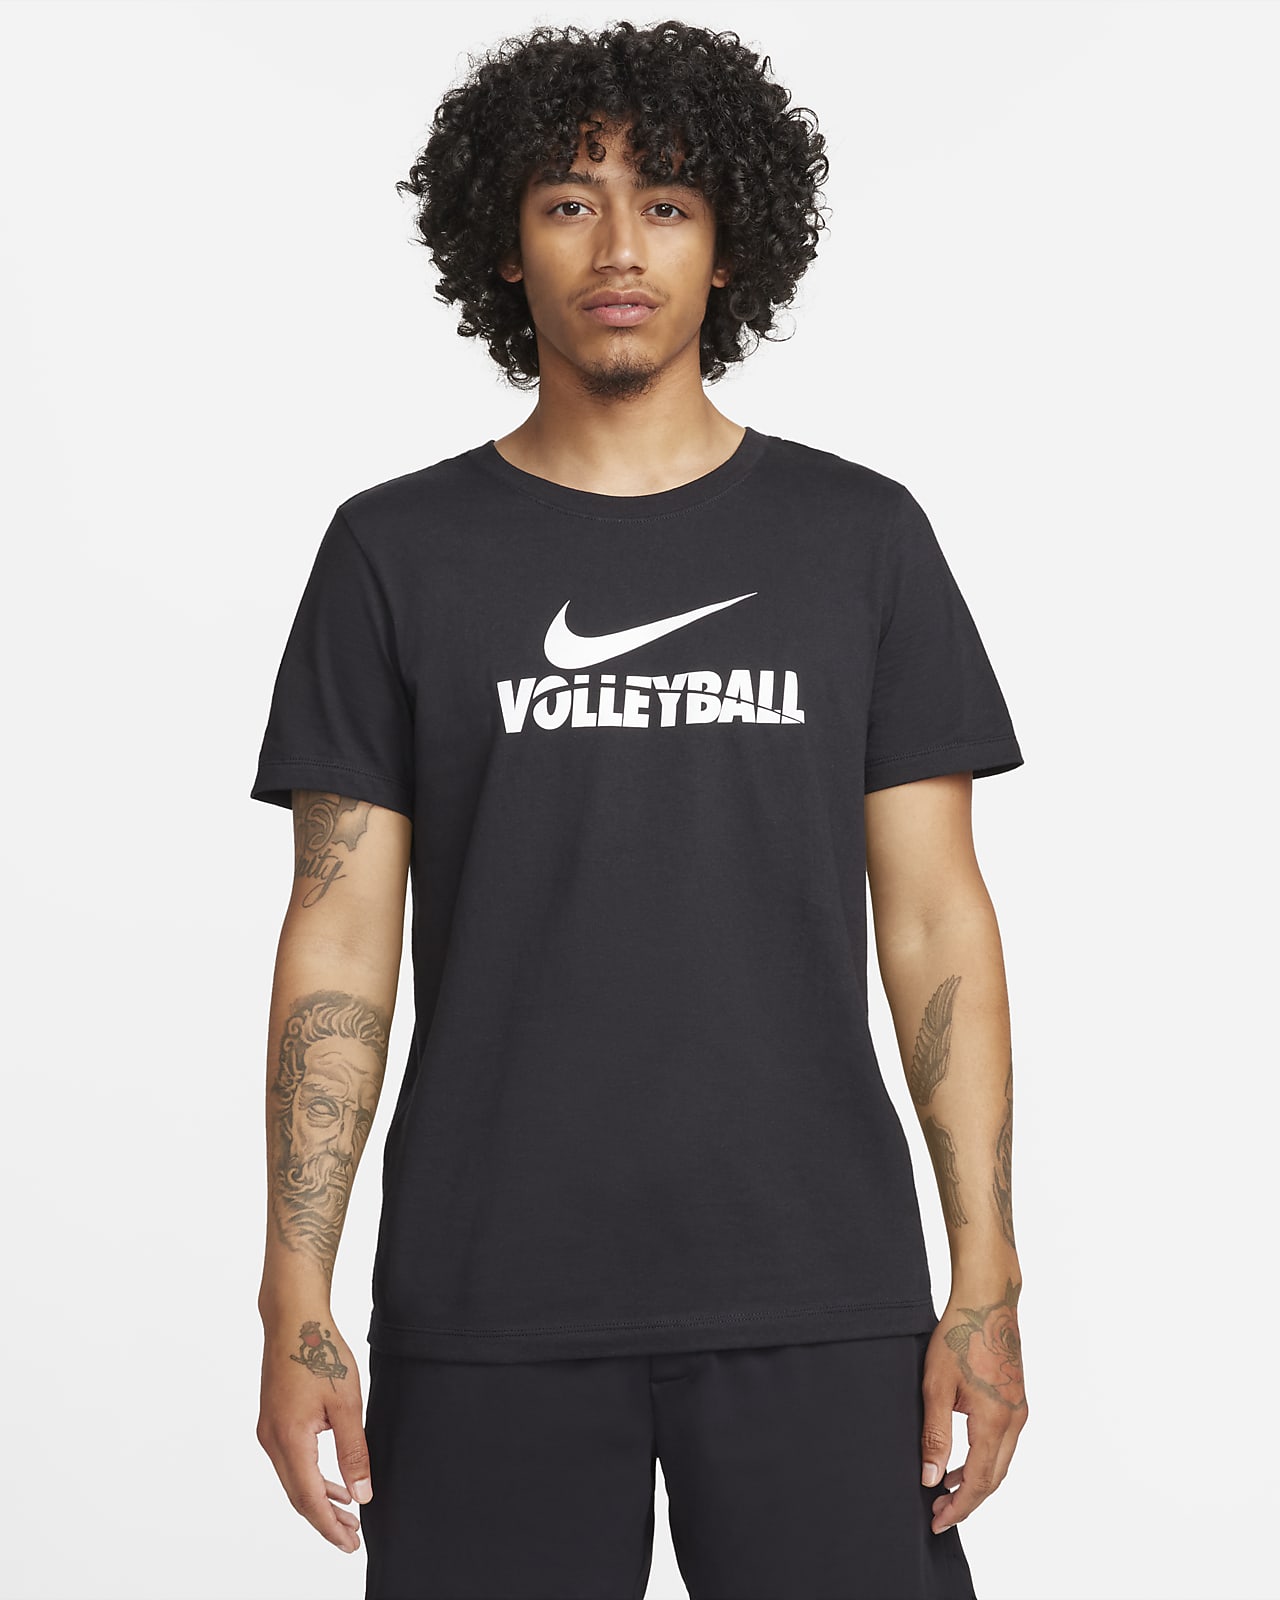 Nike Volleyball Men's T-Shirt.